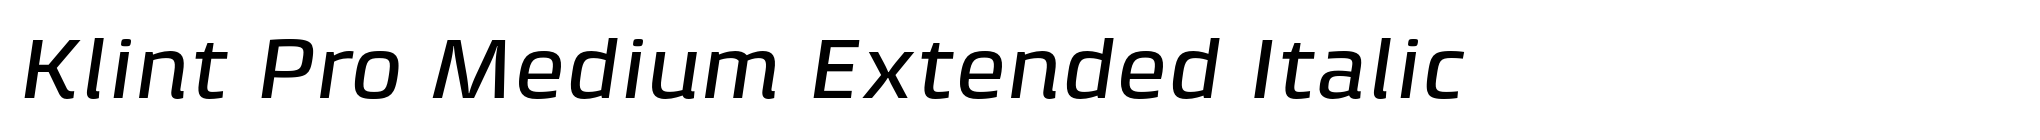 Klint Pro Medium Extended Italic image